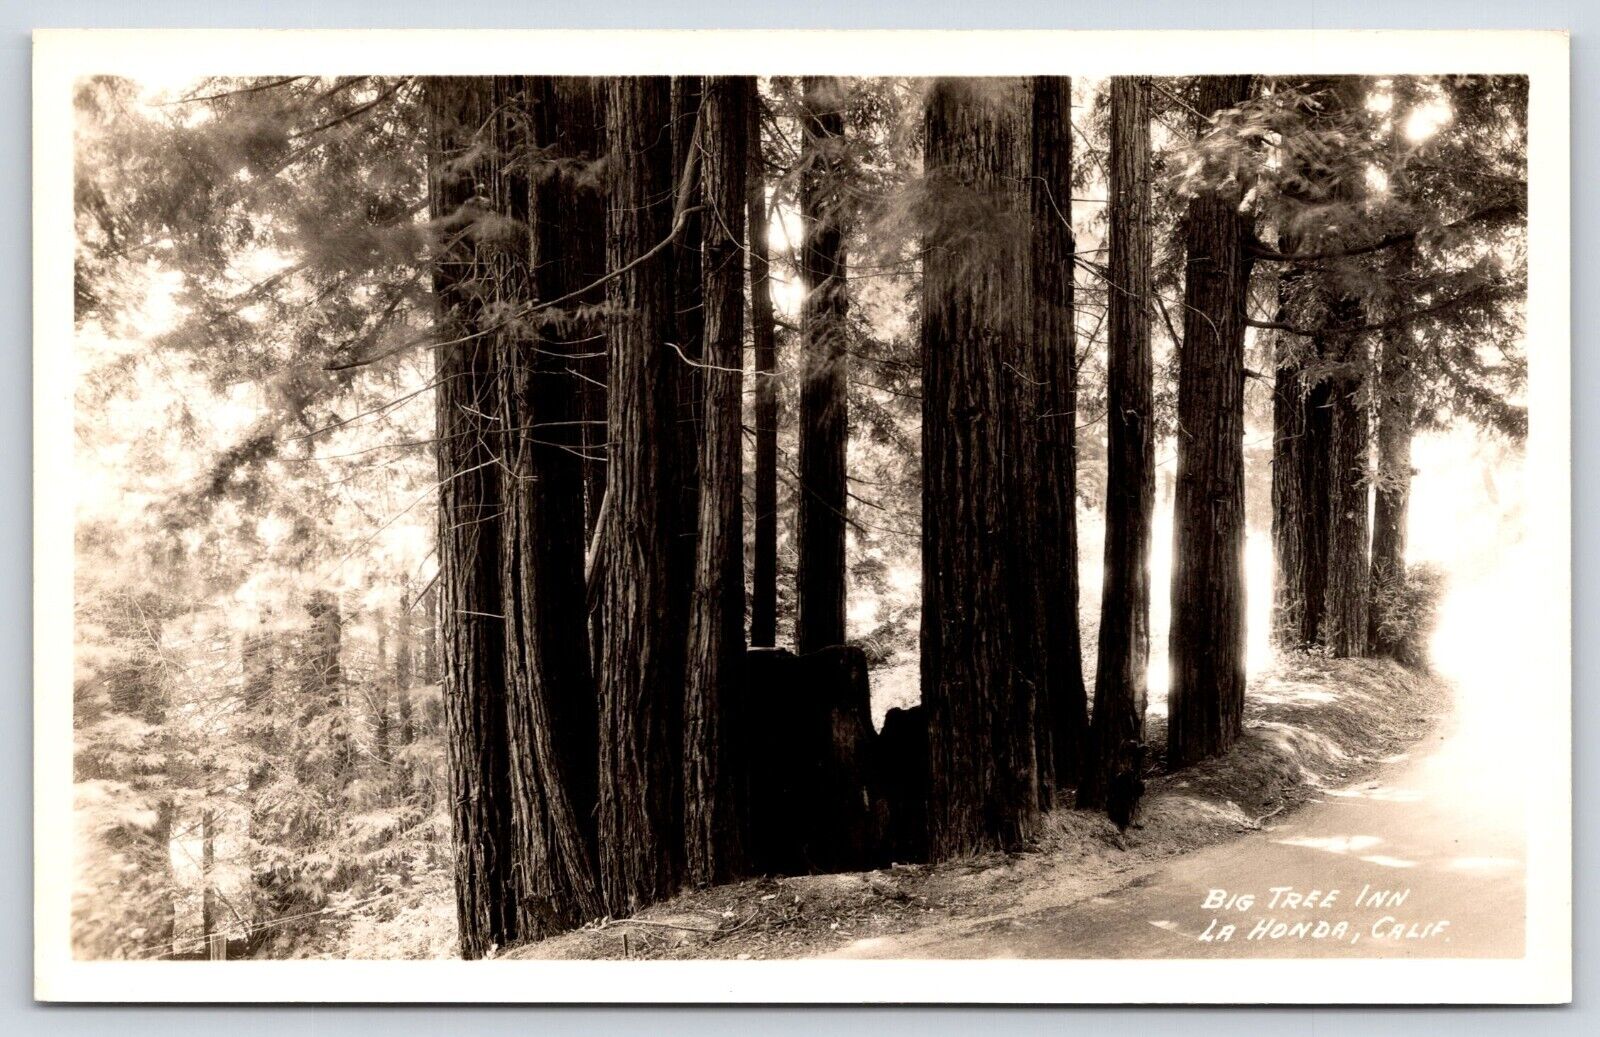 California La Honda Big Tree Inn Vintage Postcard